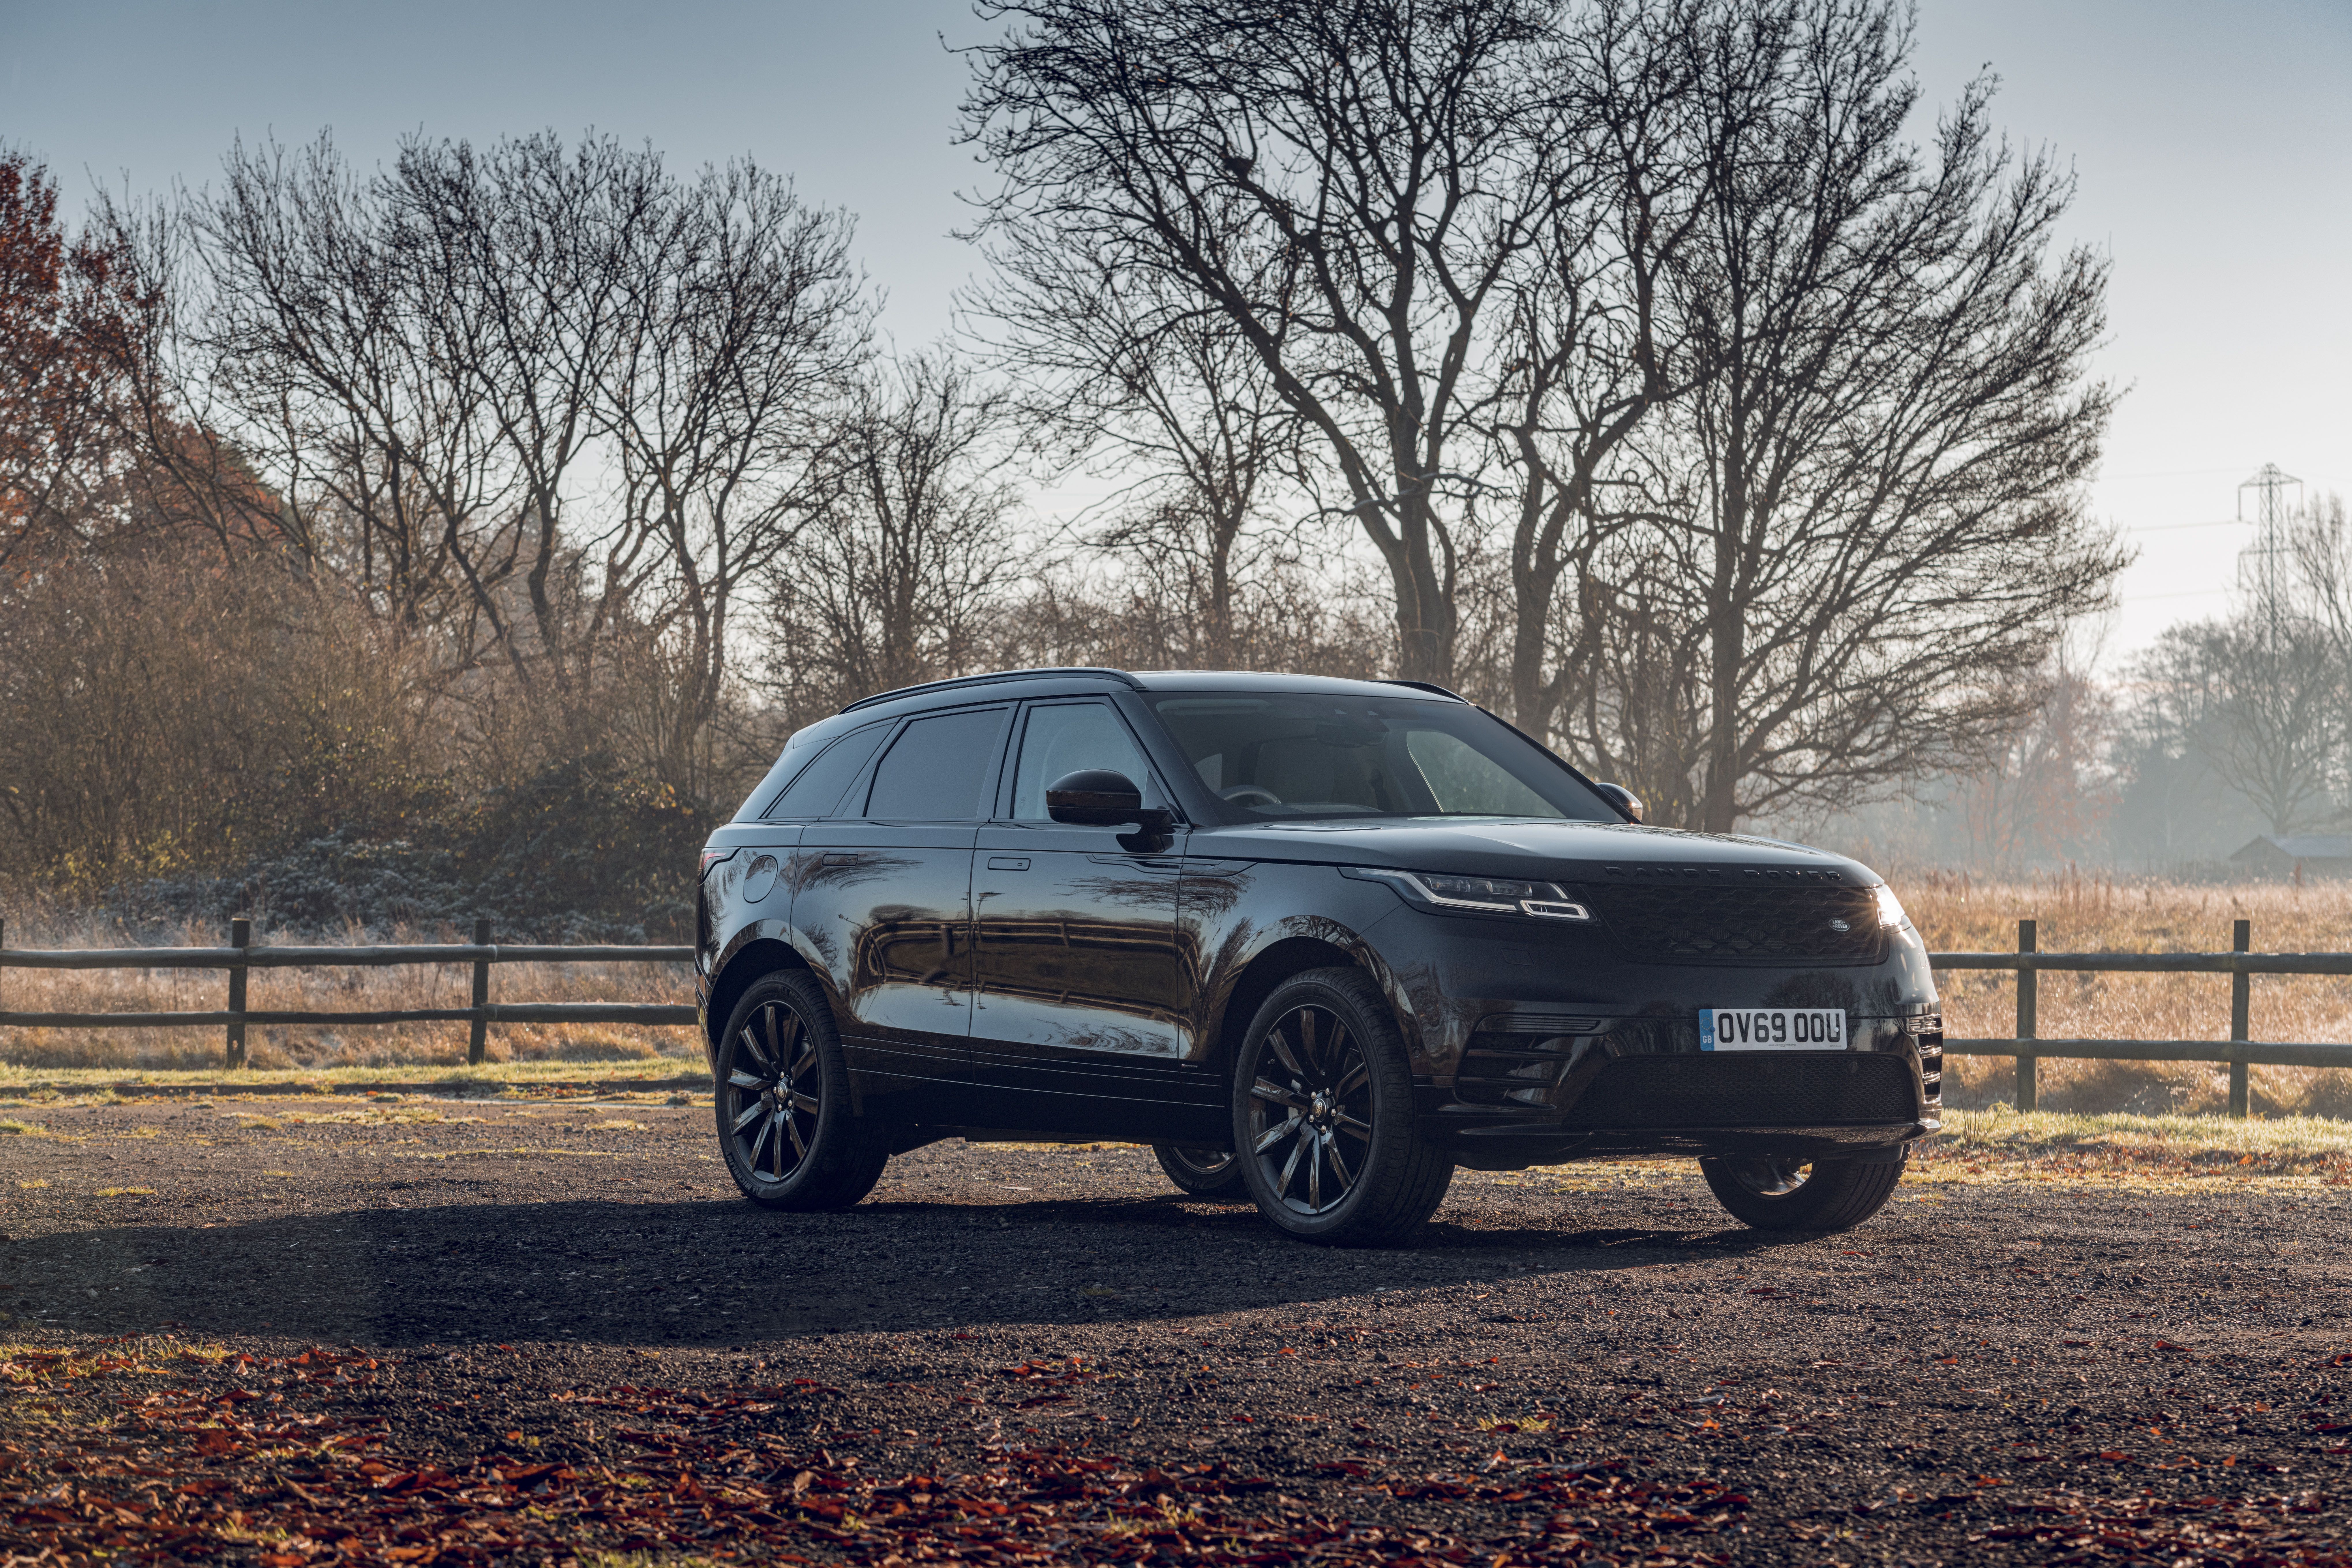 Black Range Rover Velar 8k, HD Cars, 4k Wallpaper, Image, Background, Photo and Picture